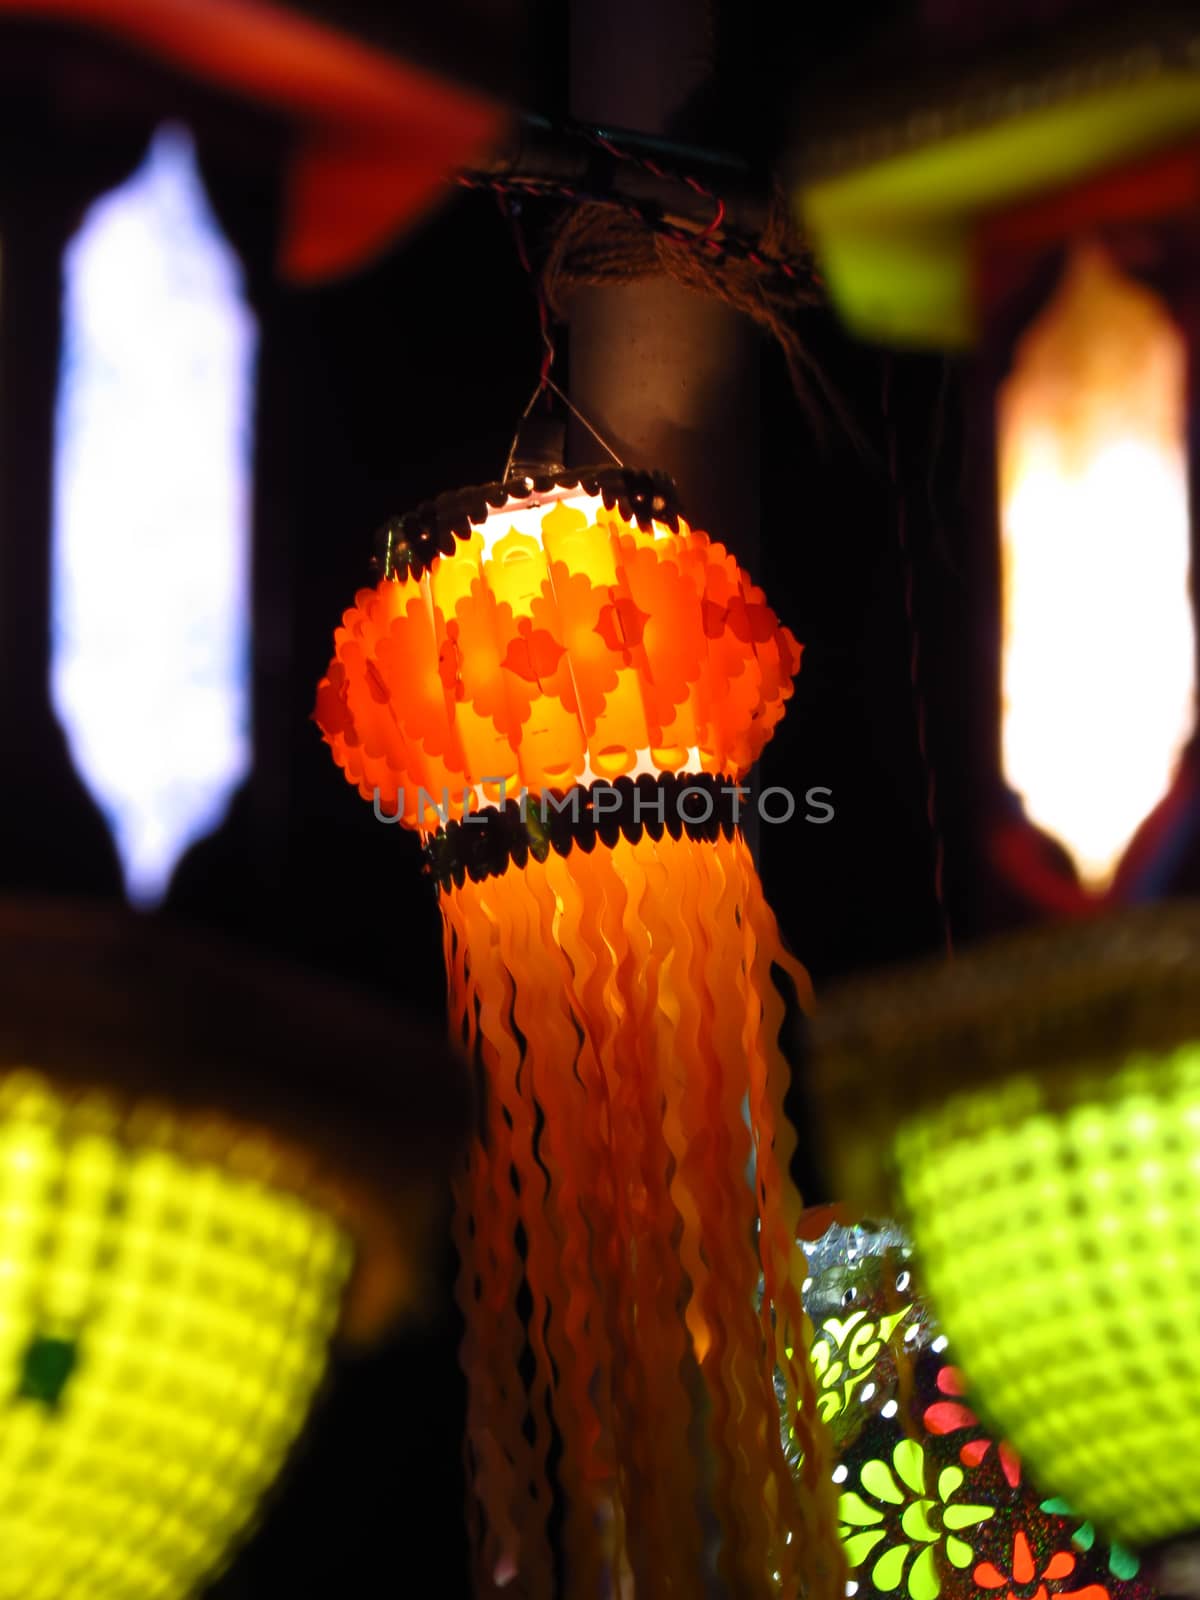 An orange traditional Diwali lantern hanging on an old pole during Diwali festival in India.                               